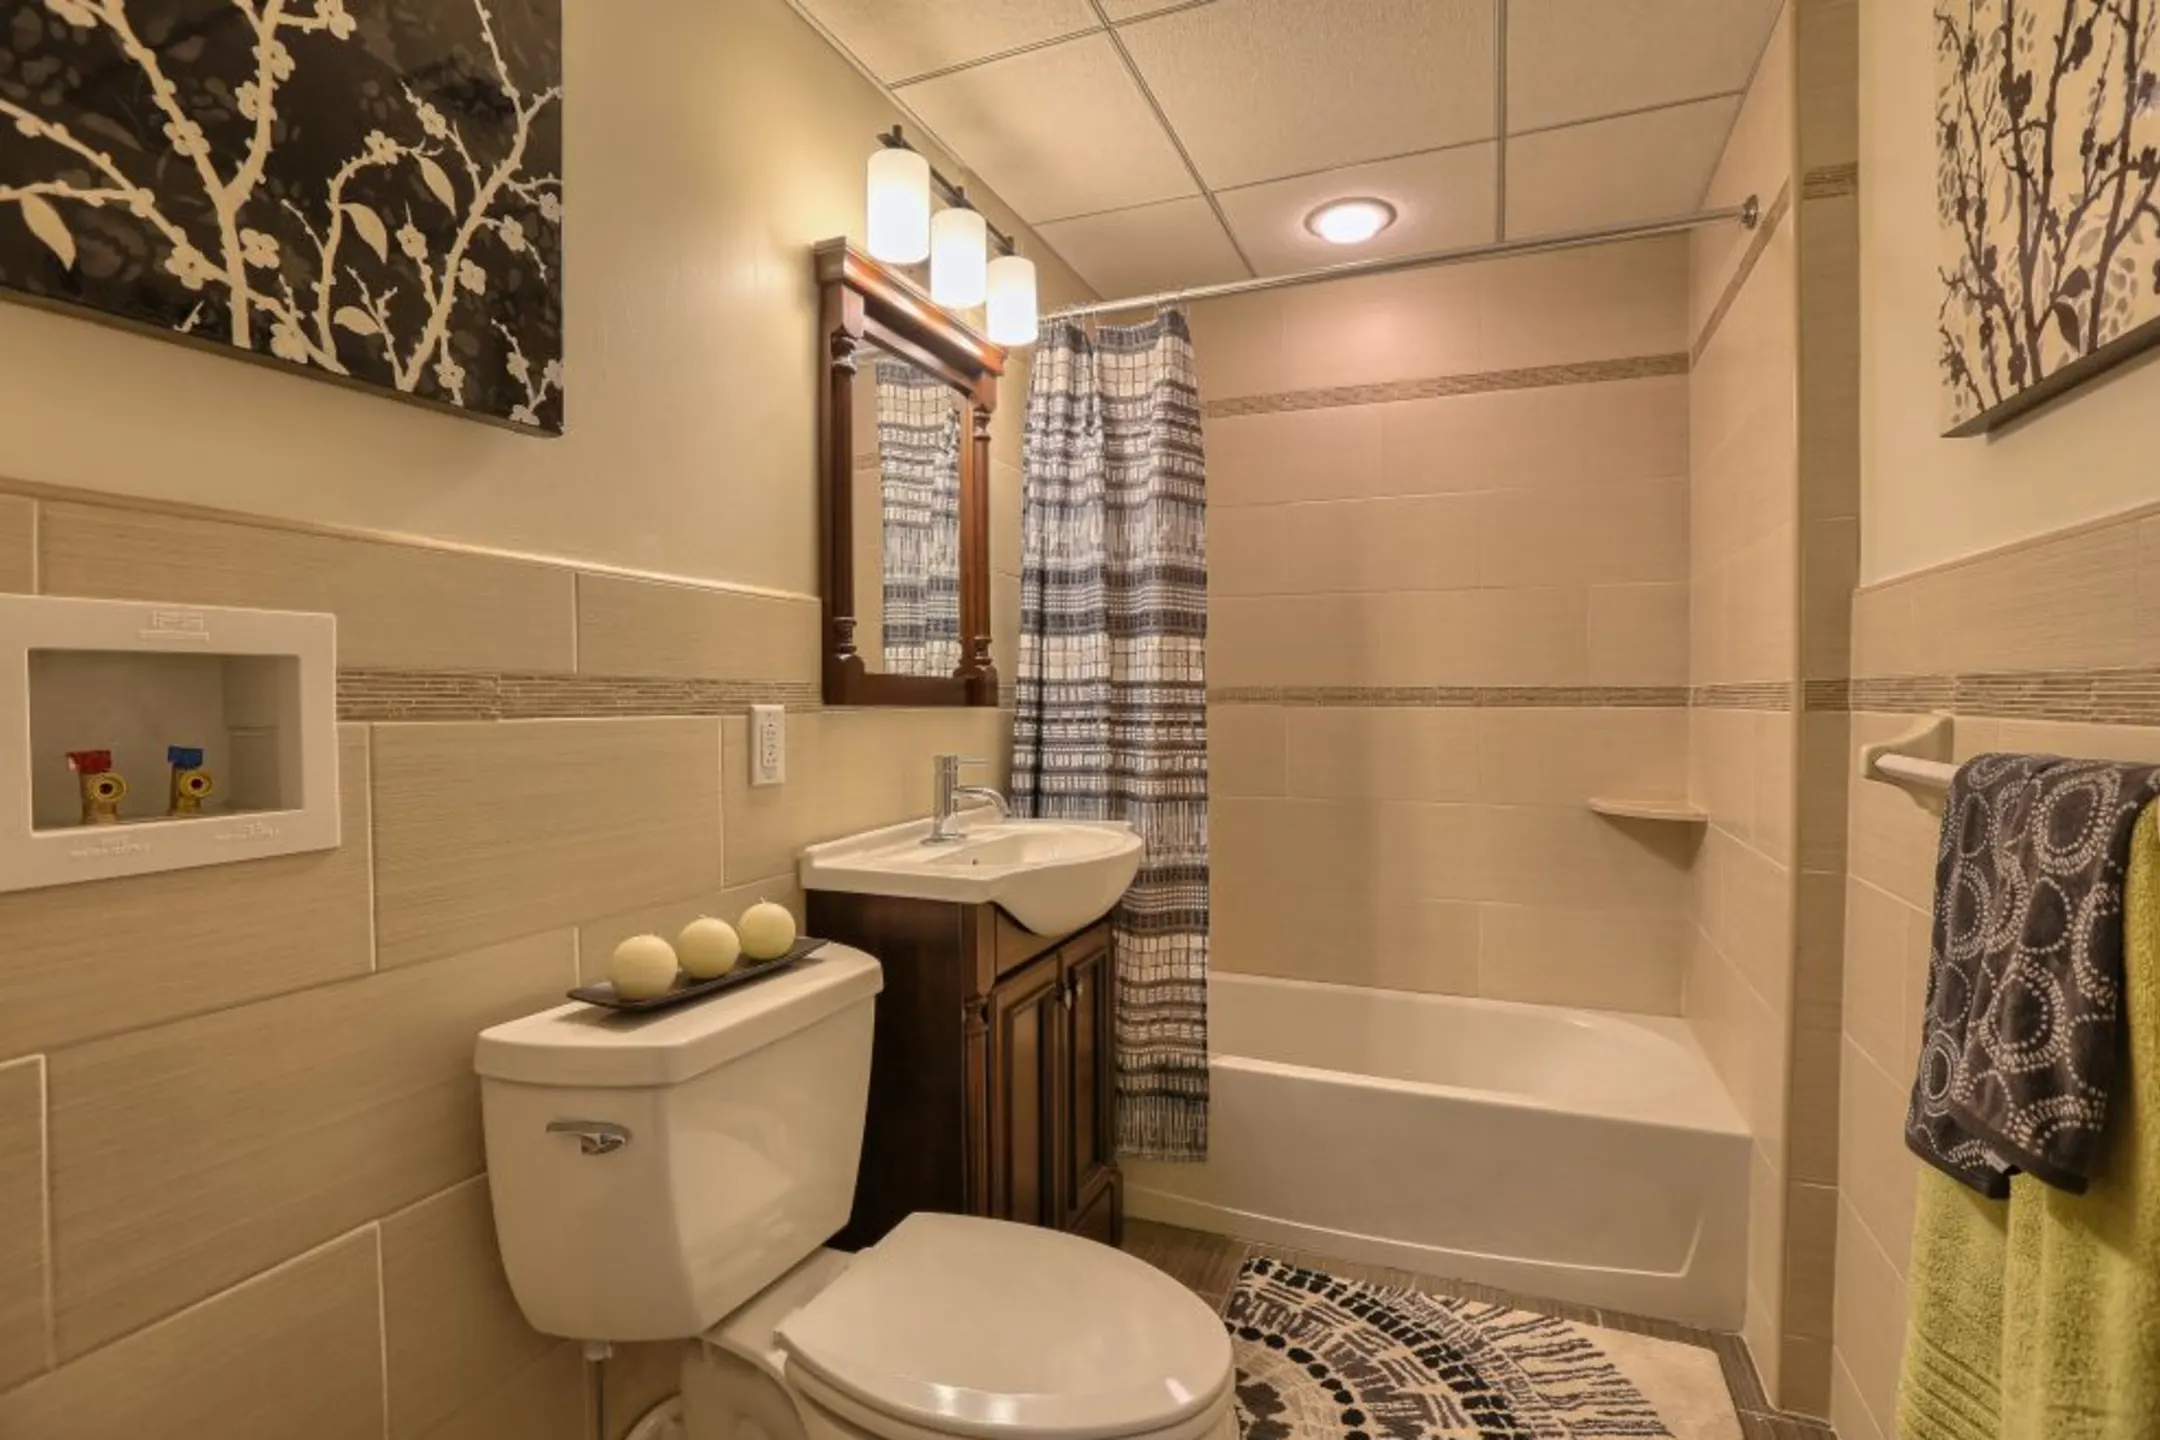 Bathroom - Executive House - Harrisburg, PA